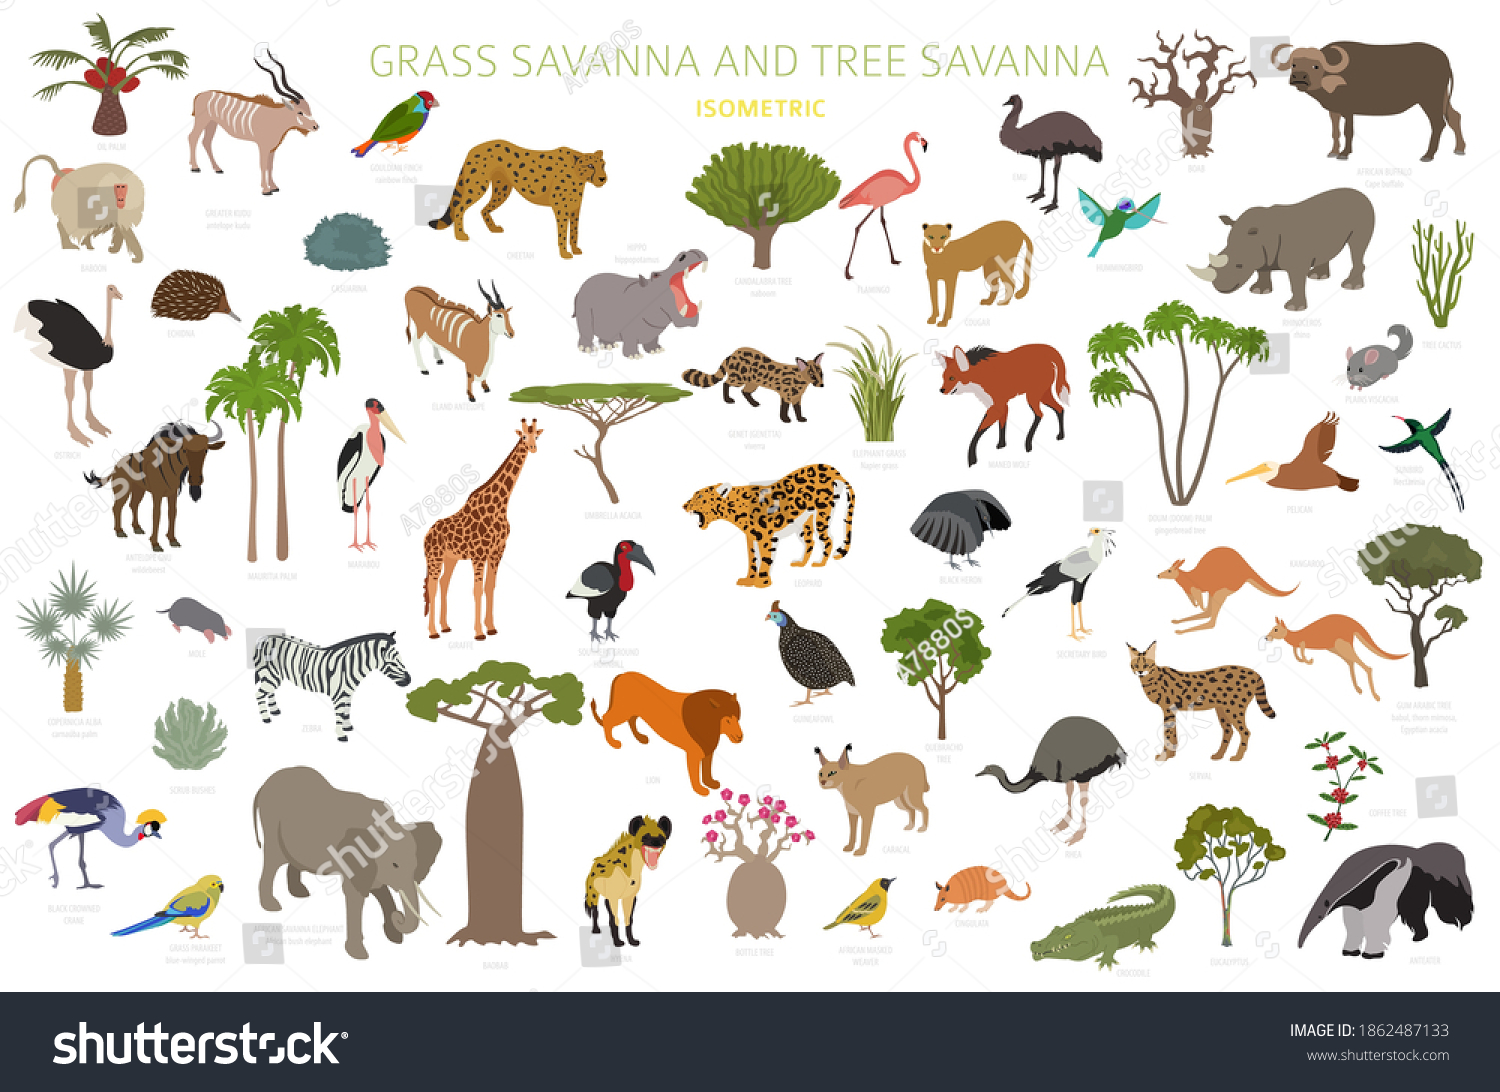 SVG of Tree savanna and grass savanna biome, natural region isometric 3d infographic. Woodland and grassland savannah, prarie, pampa. Animals, birds and vegetations ecosystem design set. Vector illustration svg